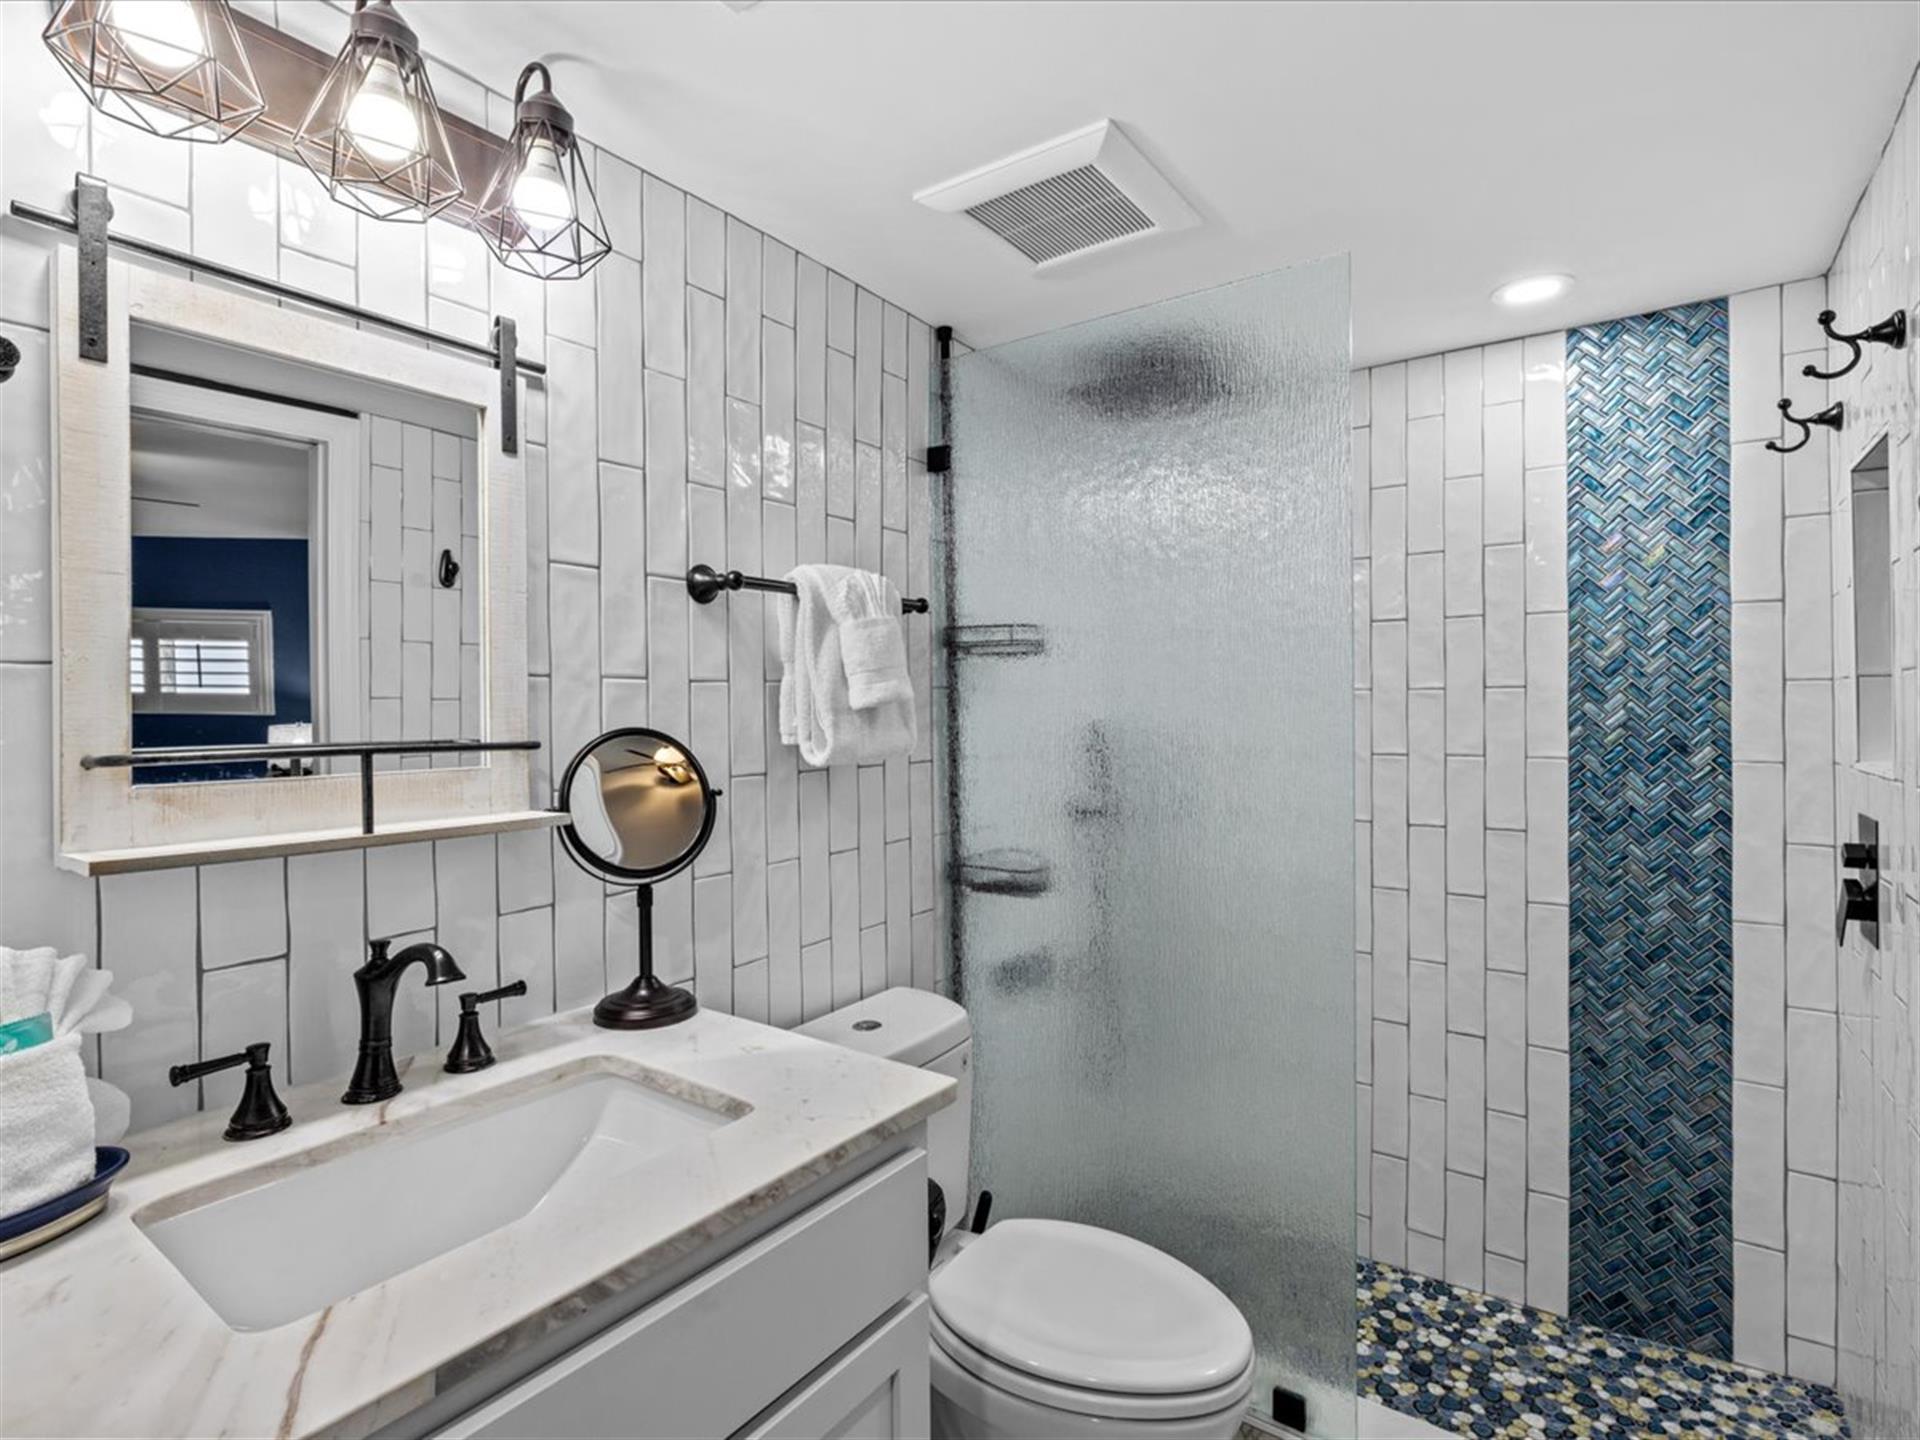 HSRC 713 Bathroom With WalkIn Shower